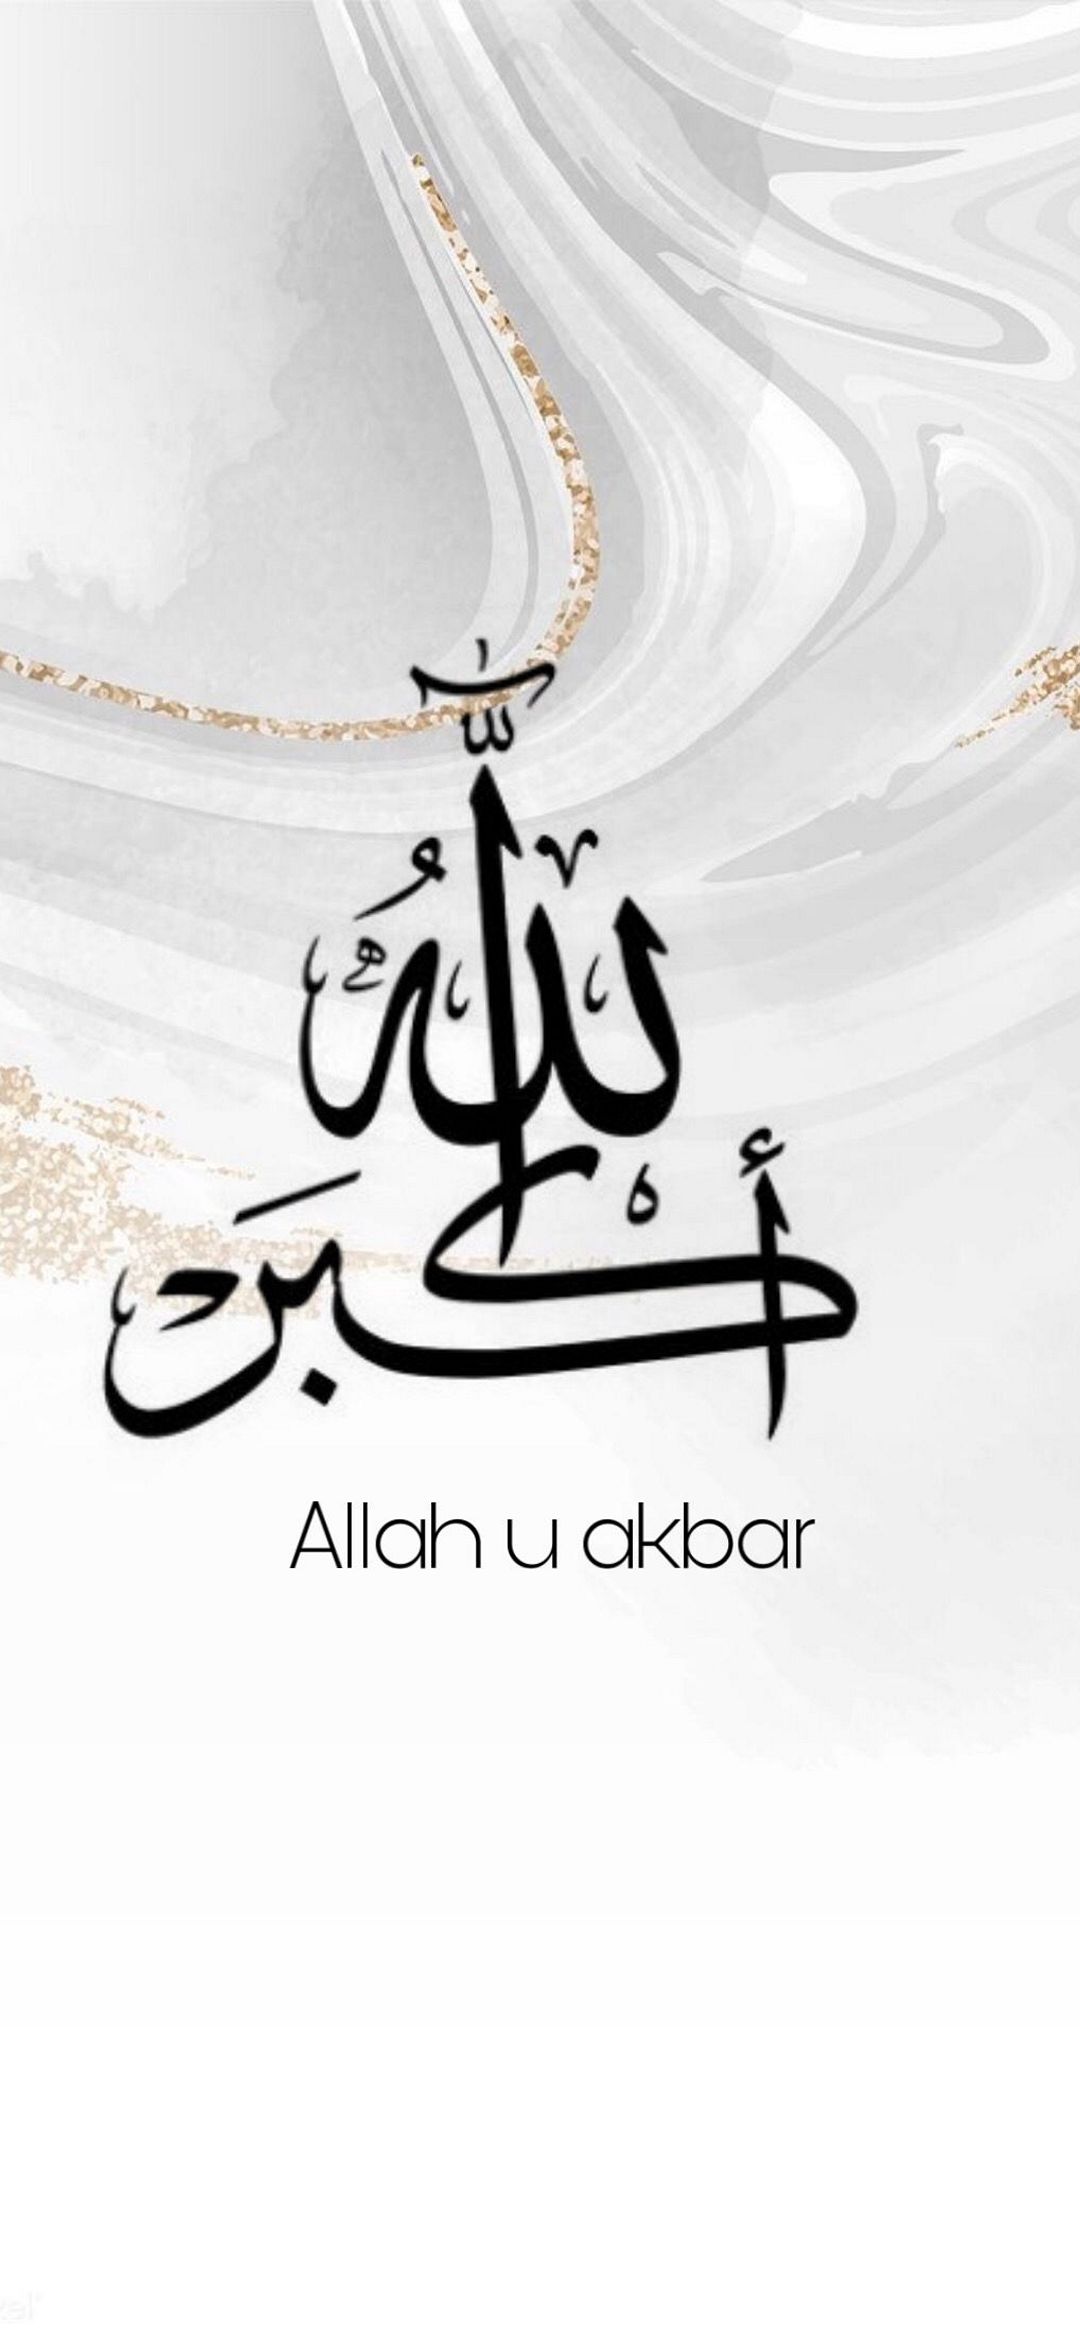 Allahu Akbar wallpaper 10 APK Download  Android Personalization Apps   APK Downloader